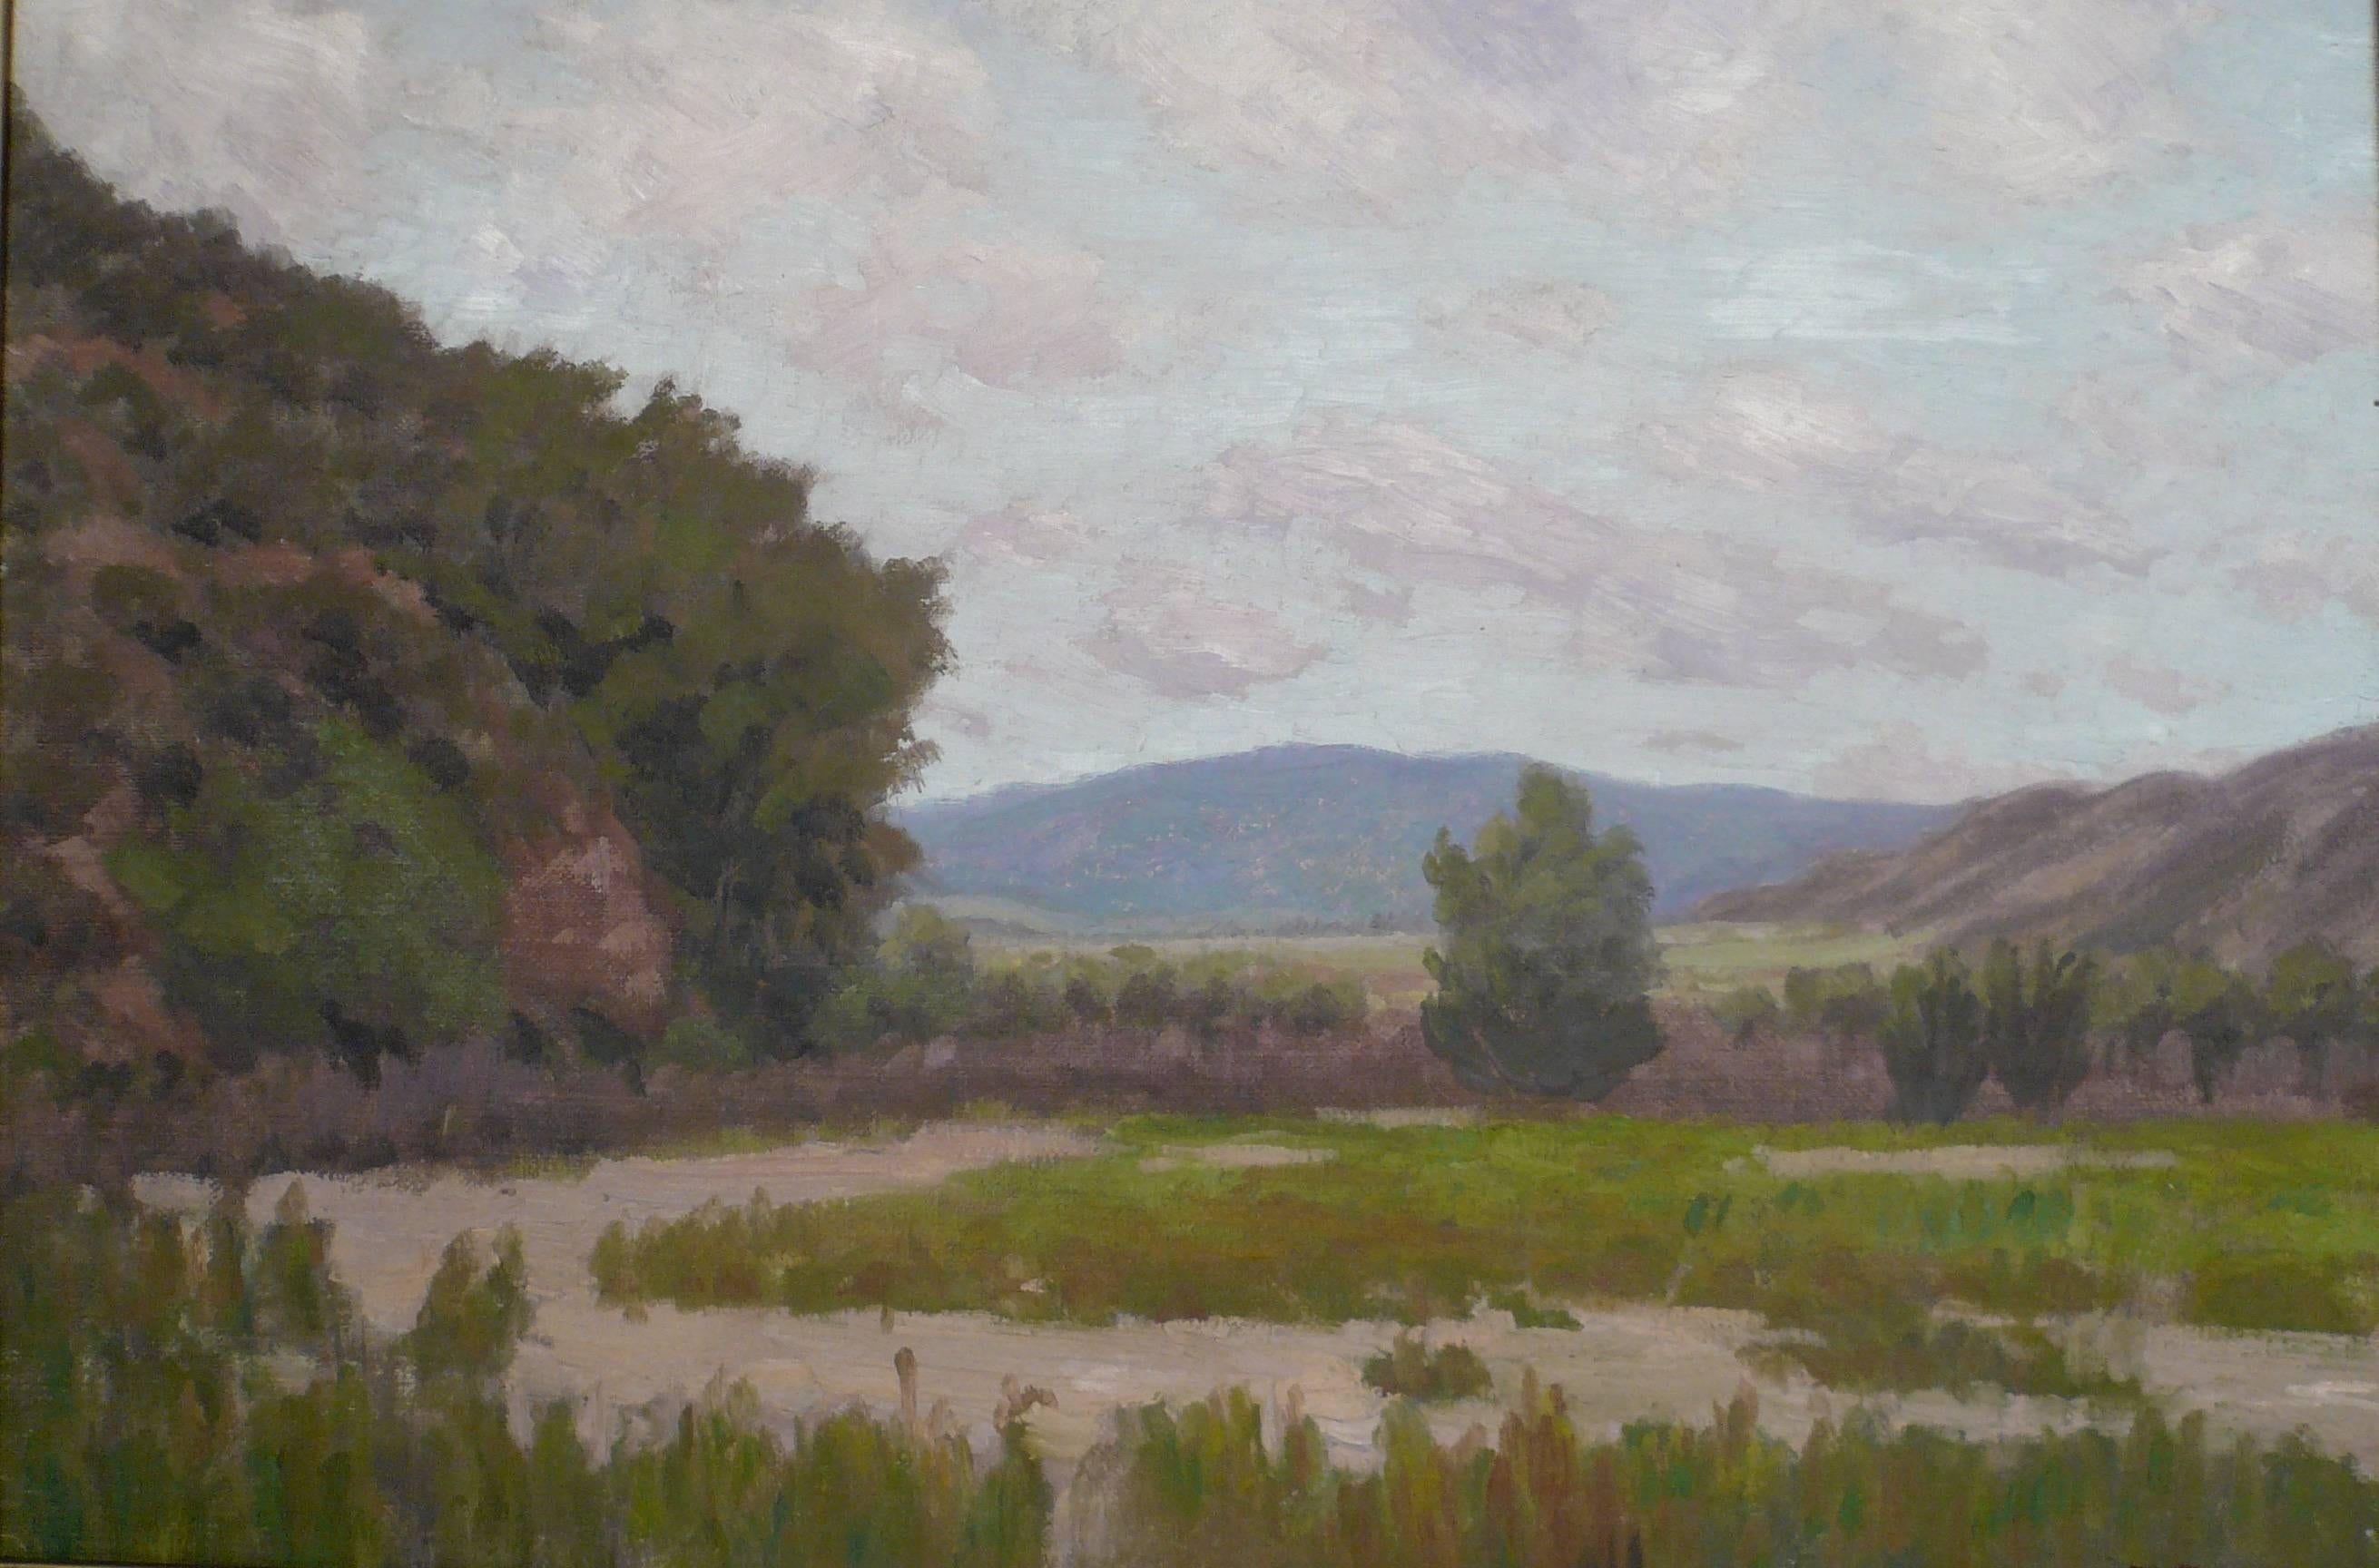 California Landscape by American Impressionist Painter Edward B. Butler 1